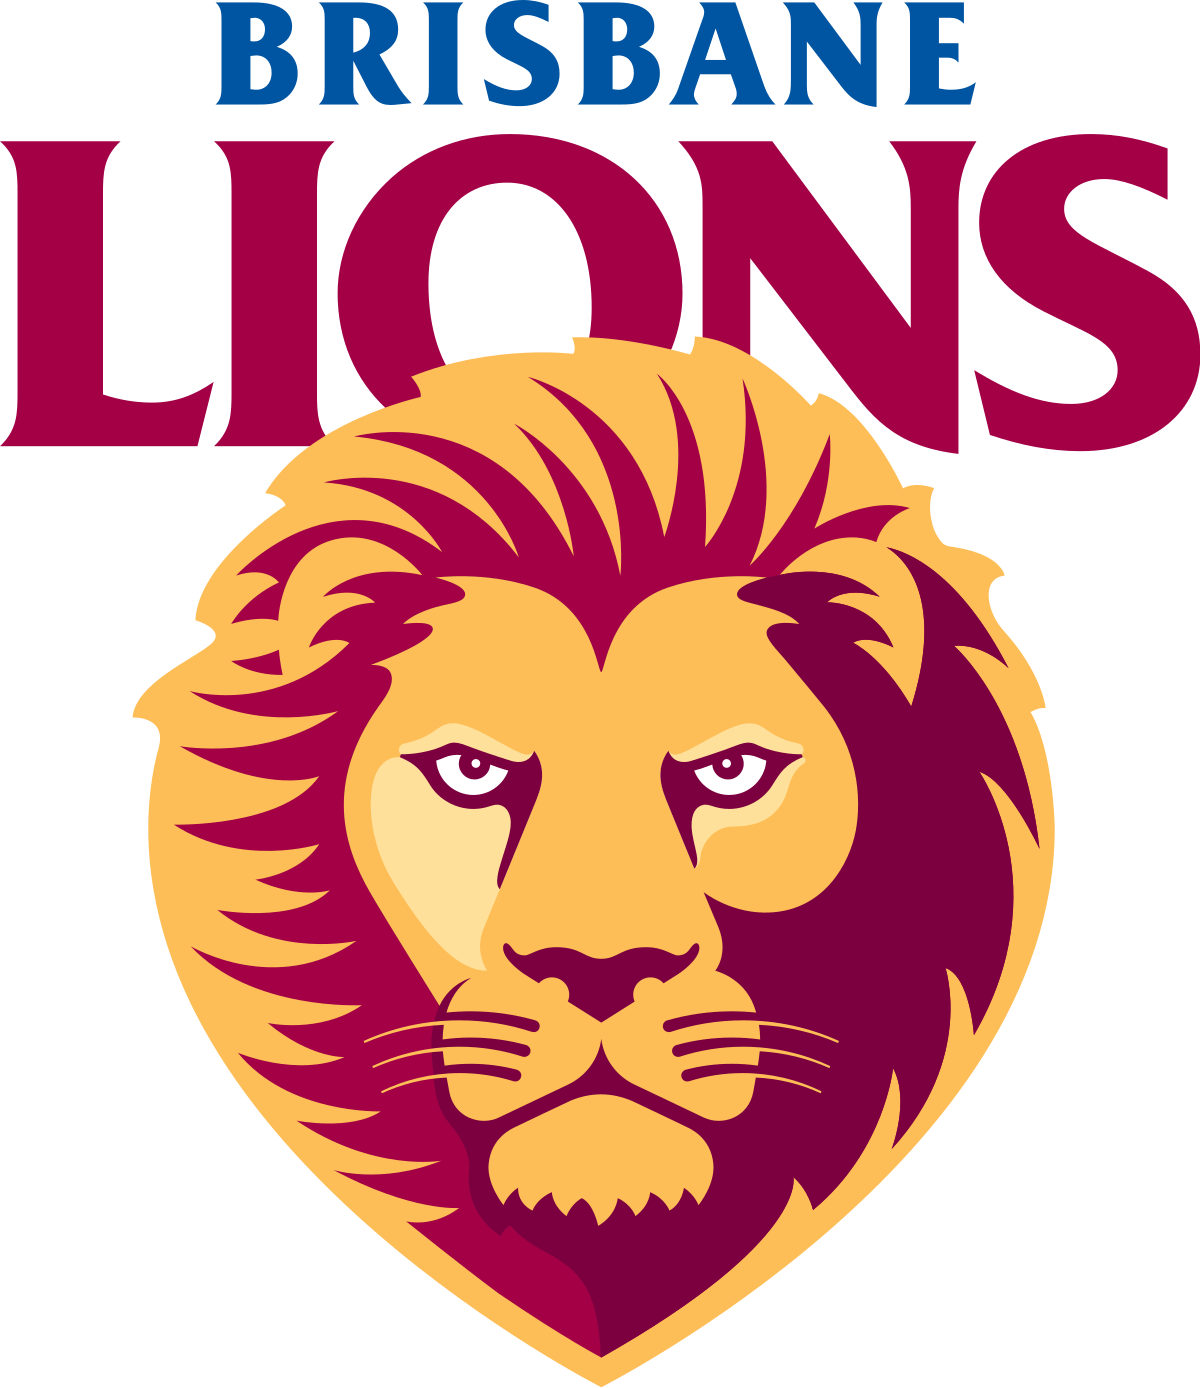 Who Has a Lion Logo - Brisbane Lions